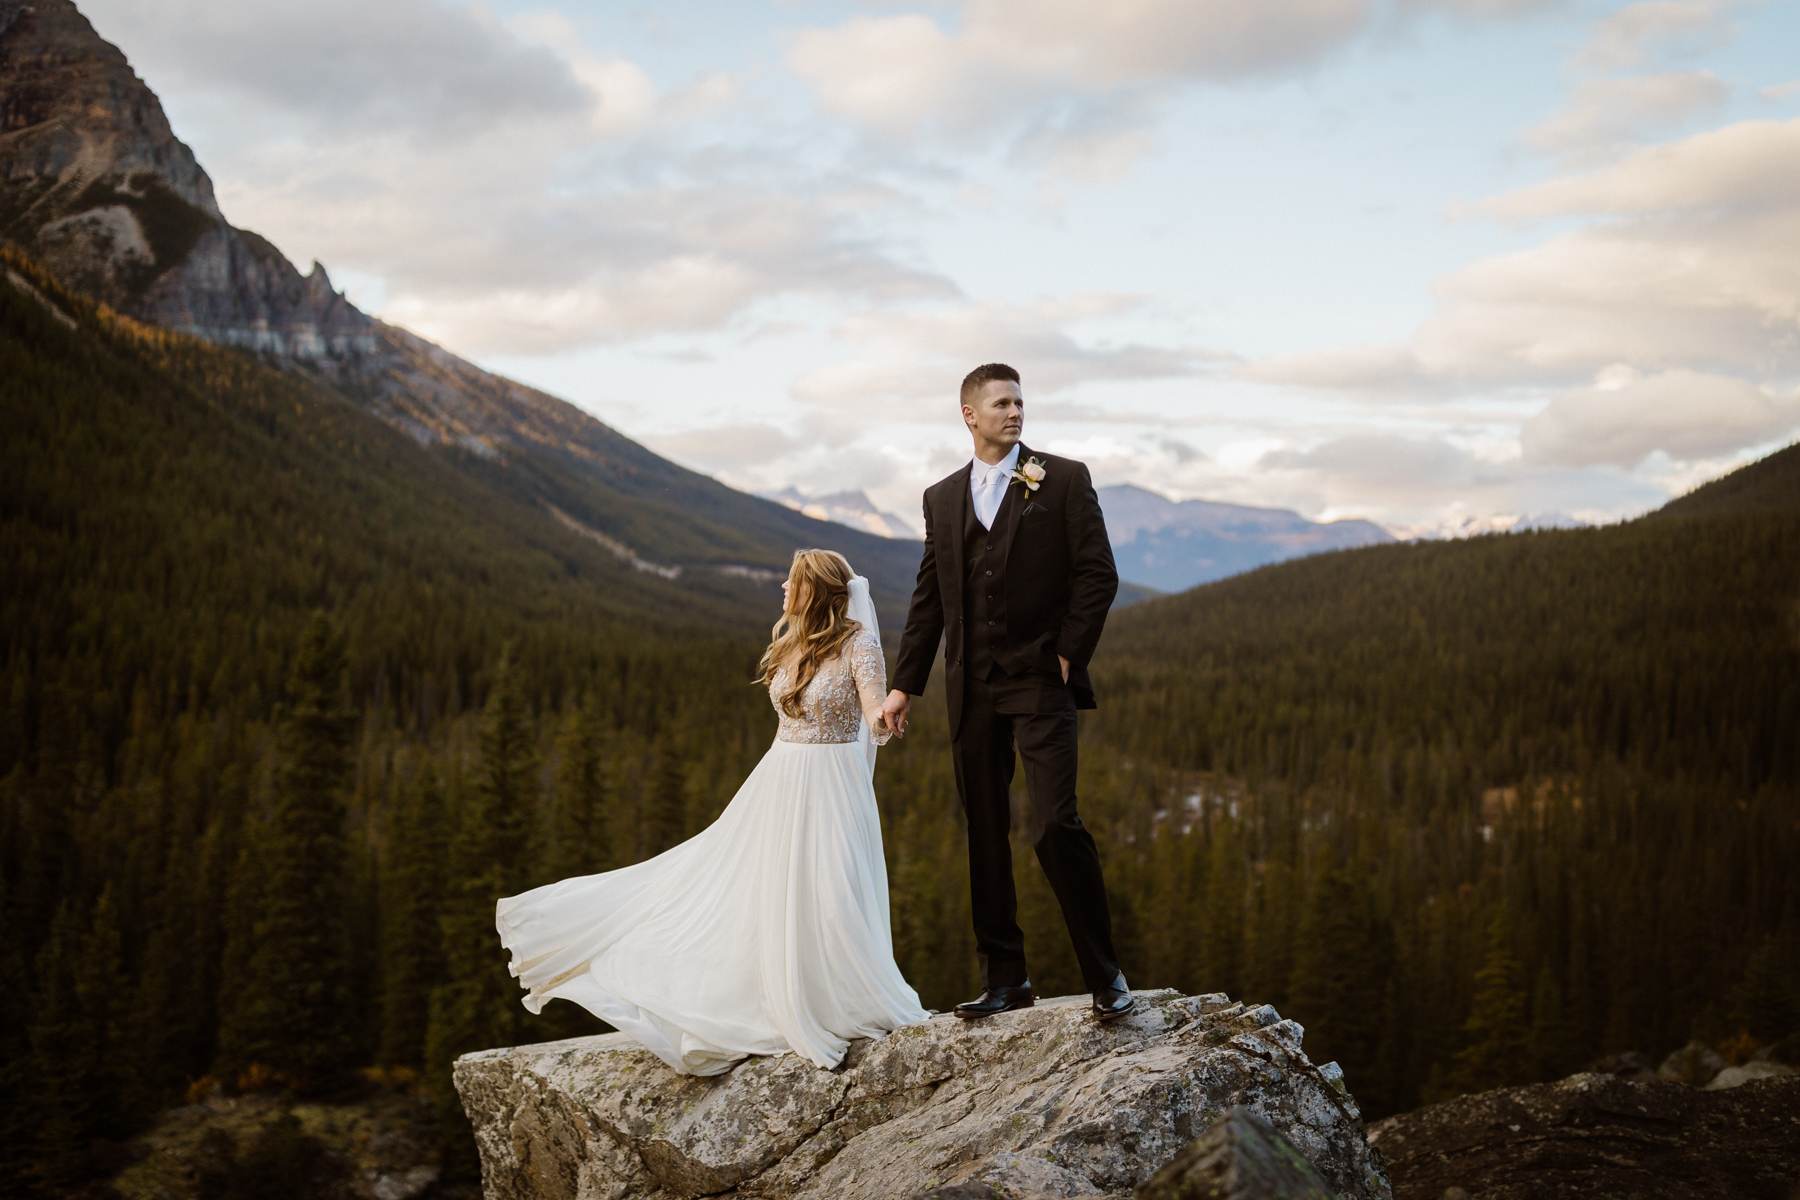 Moraine Lake wedding photos - Image 61